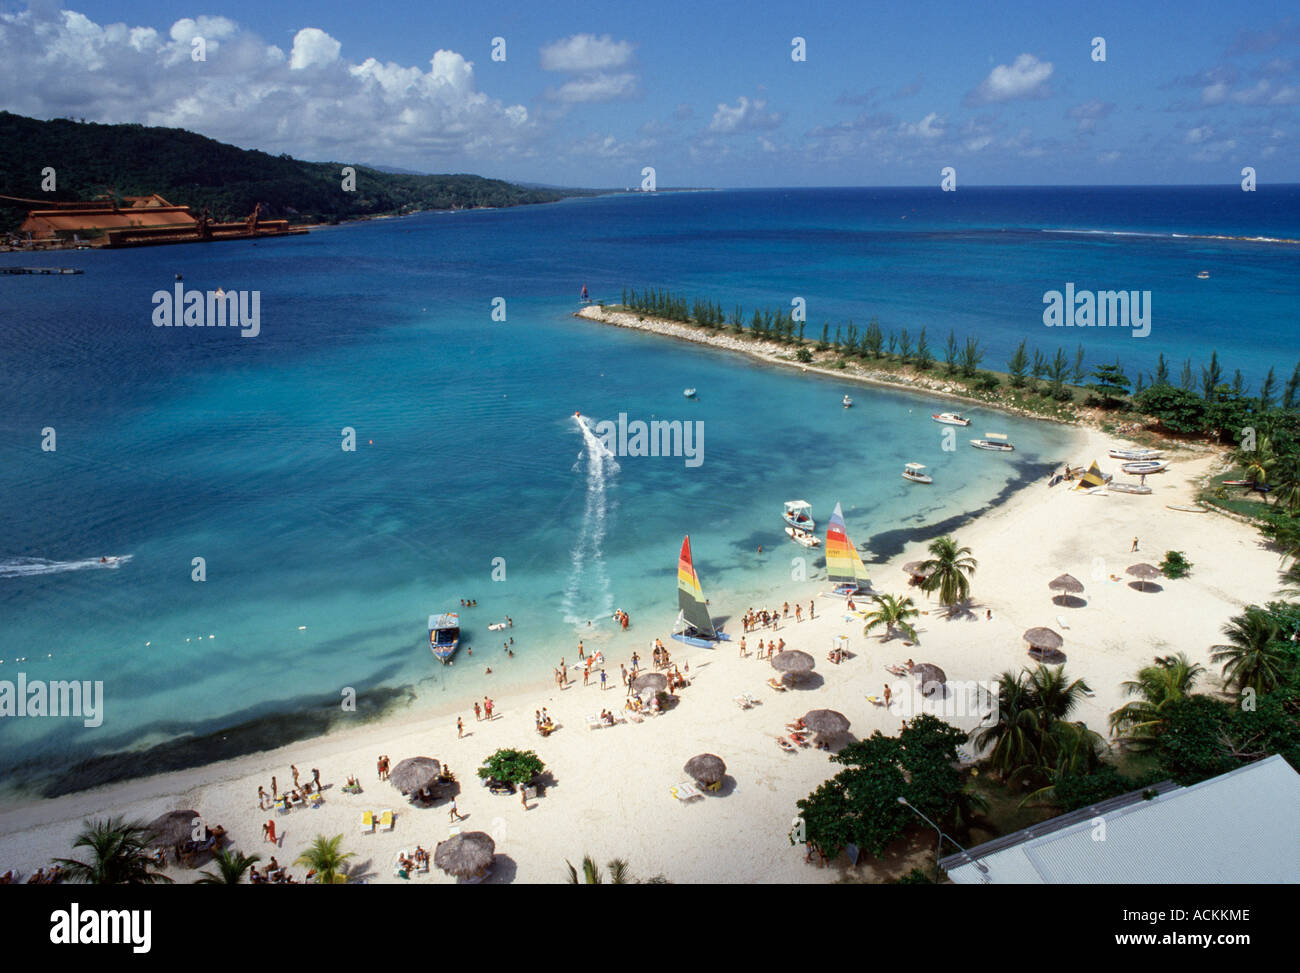 Jamaica Aerial view of beach and activities Stock Photo